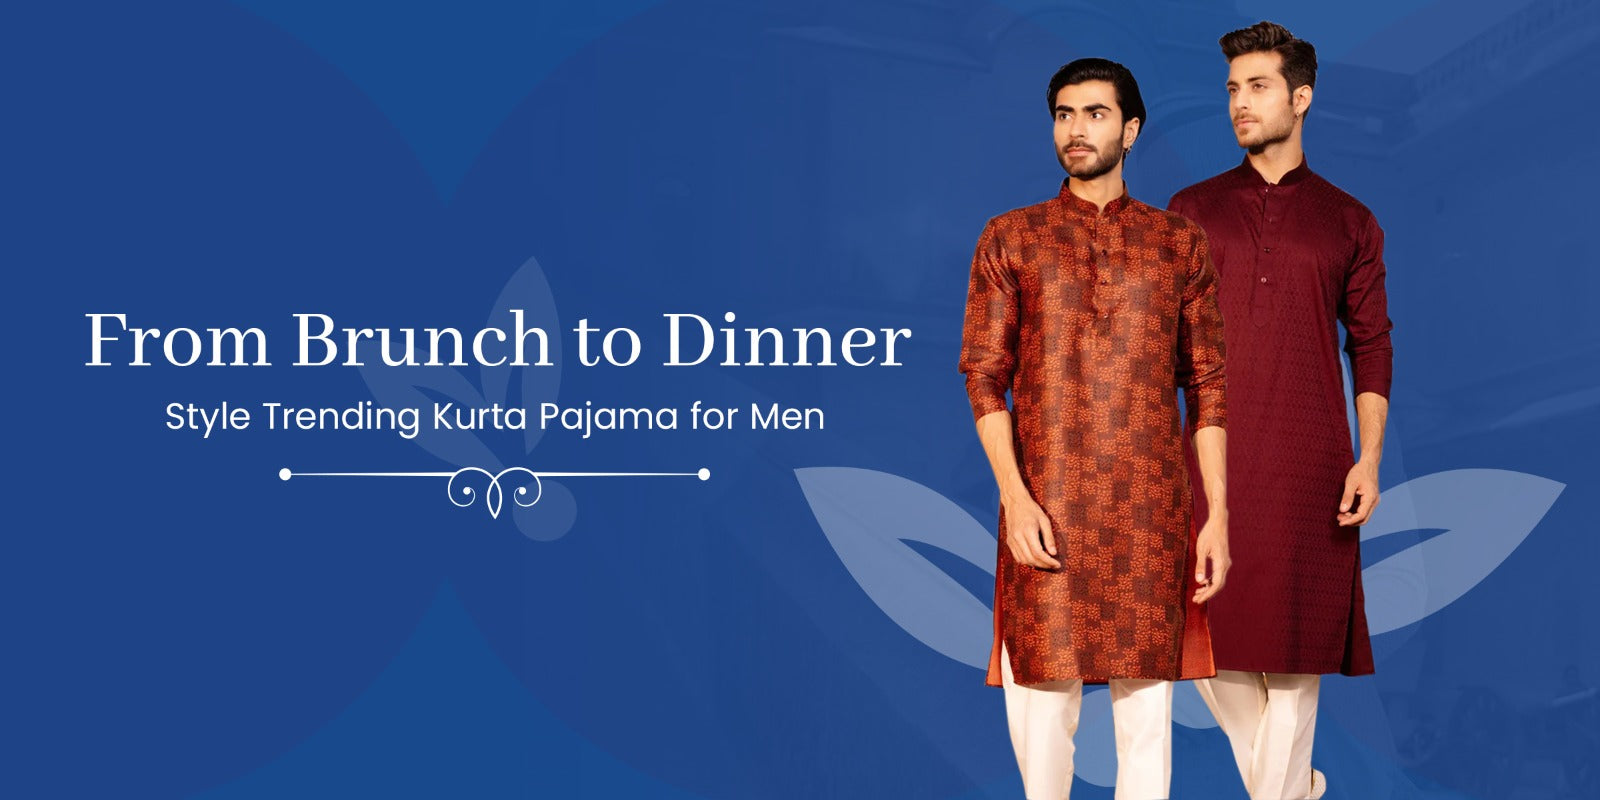 From Brunch to Dinner: Style Trending Kurta Pajama